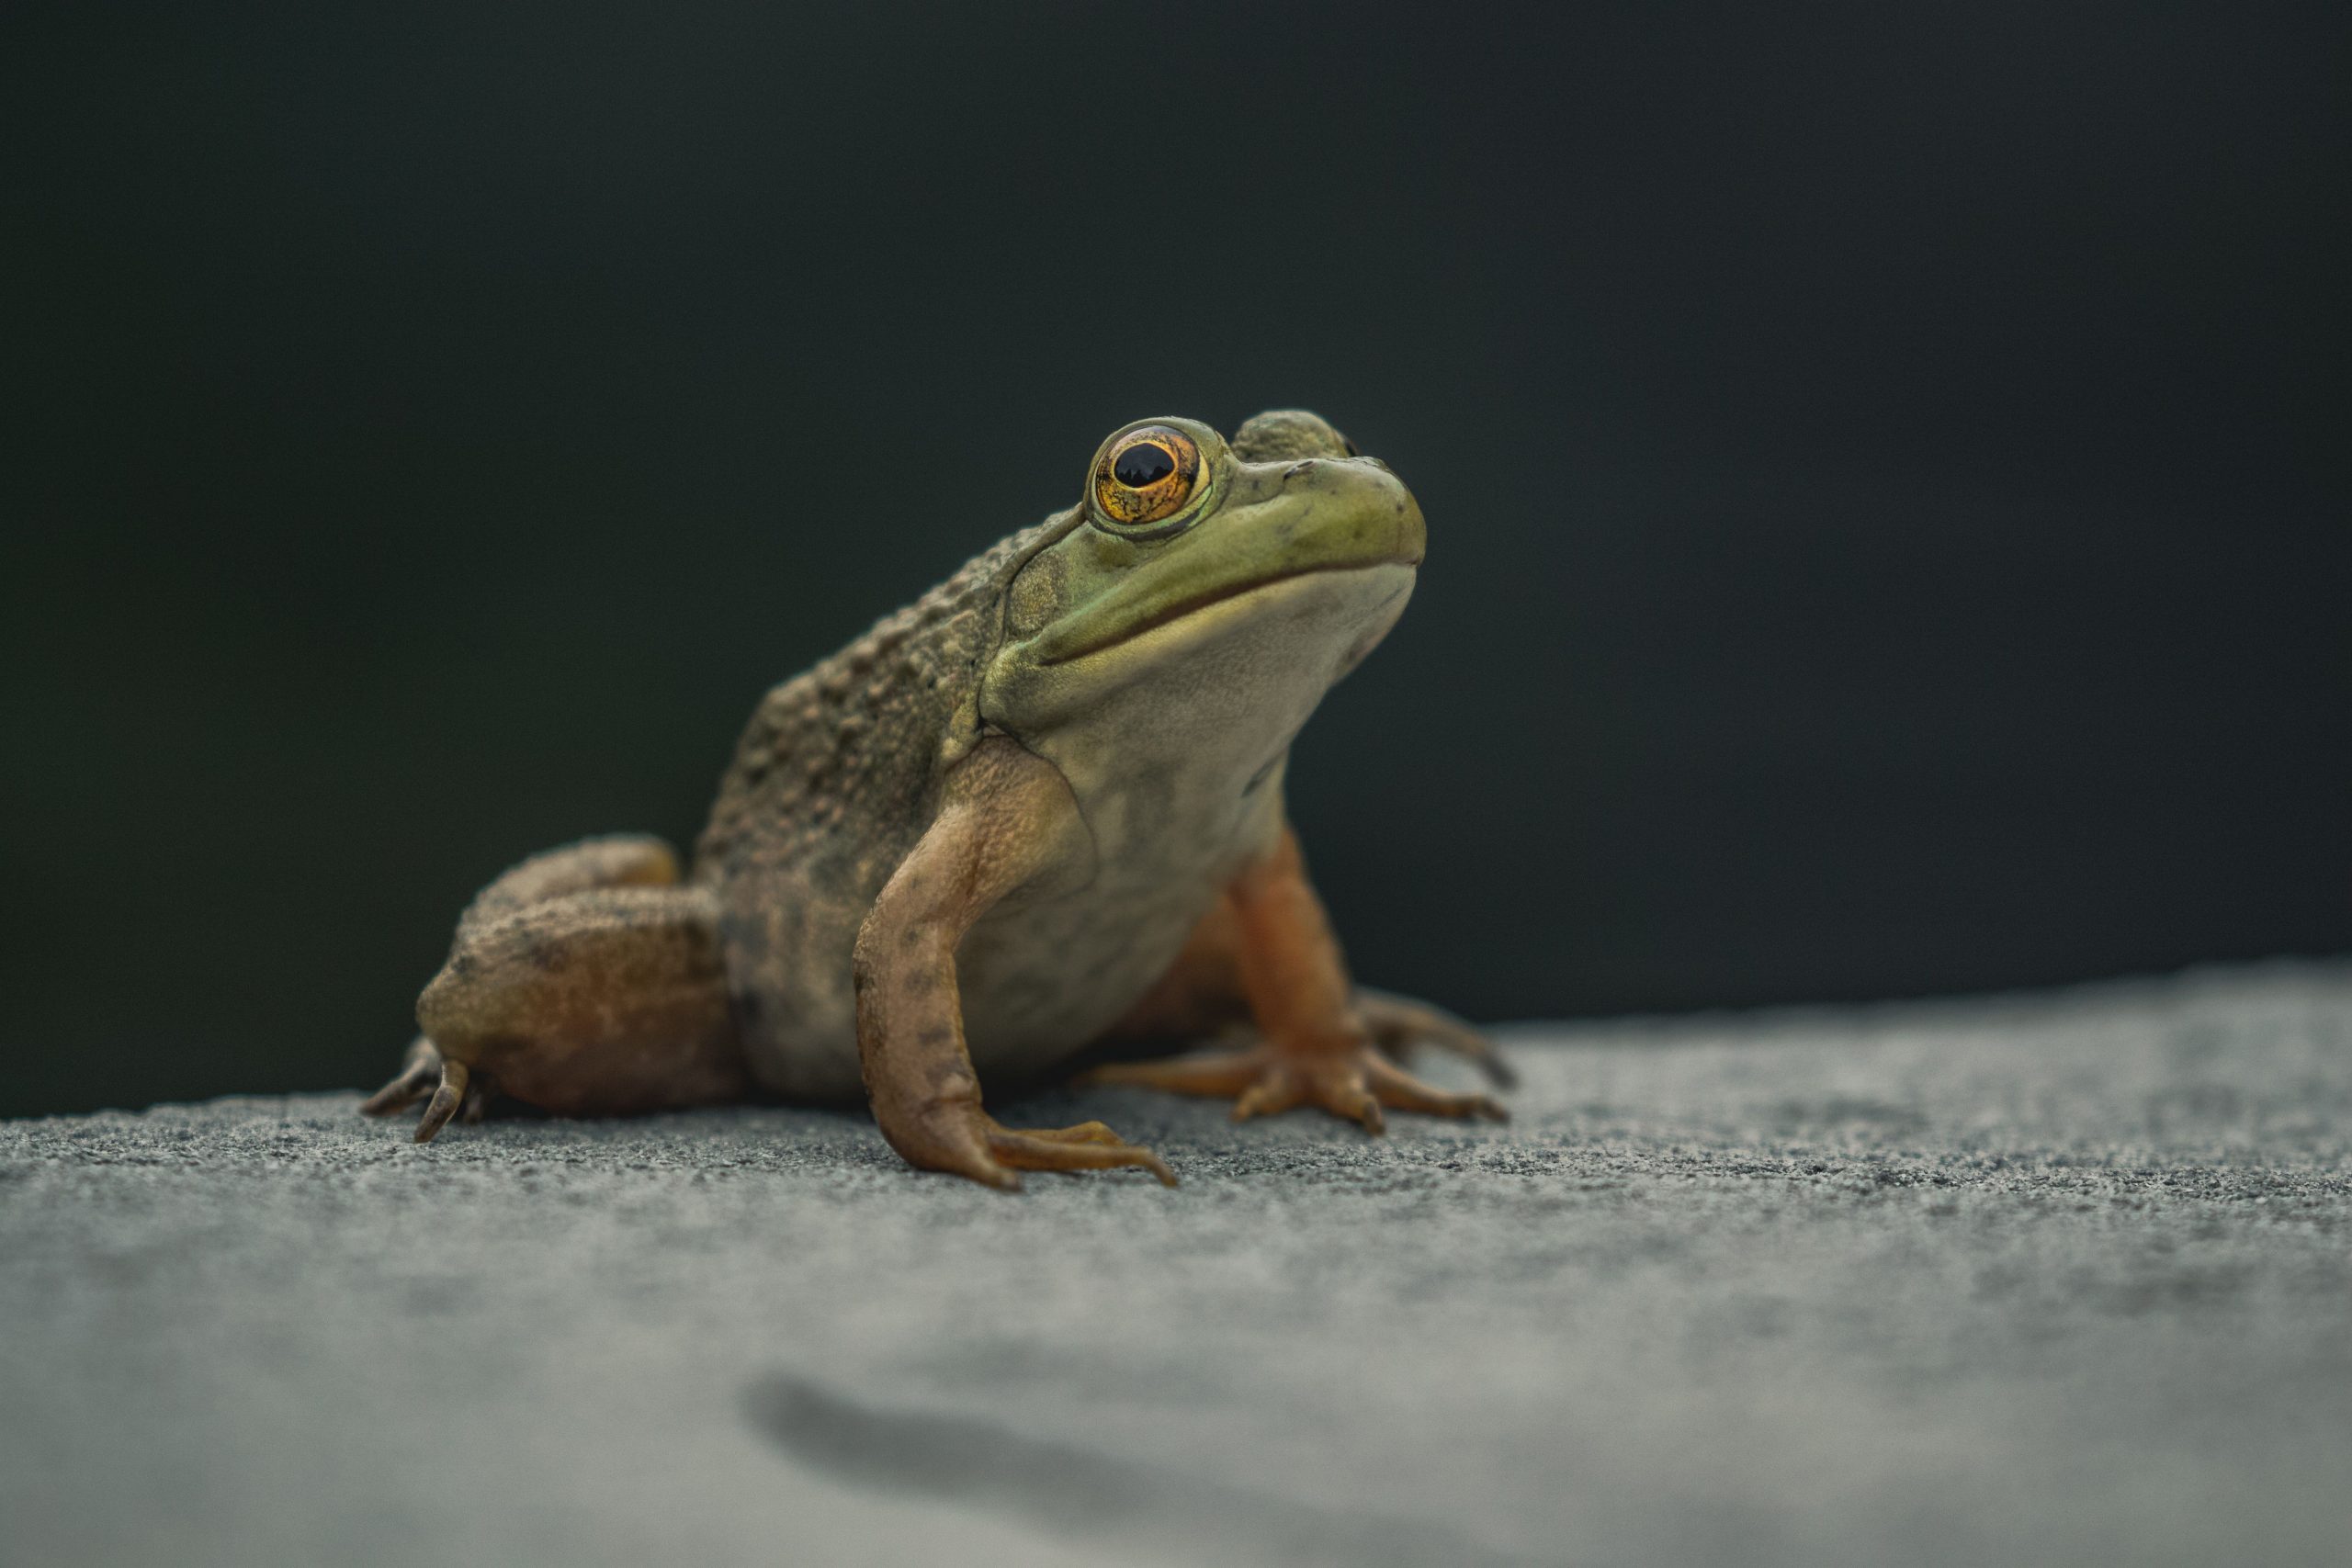 Australian scientist uses shrills, croaks and whistles to speak to frogs